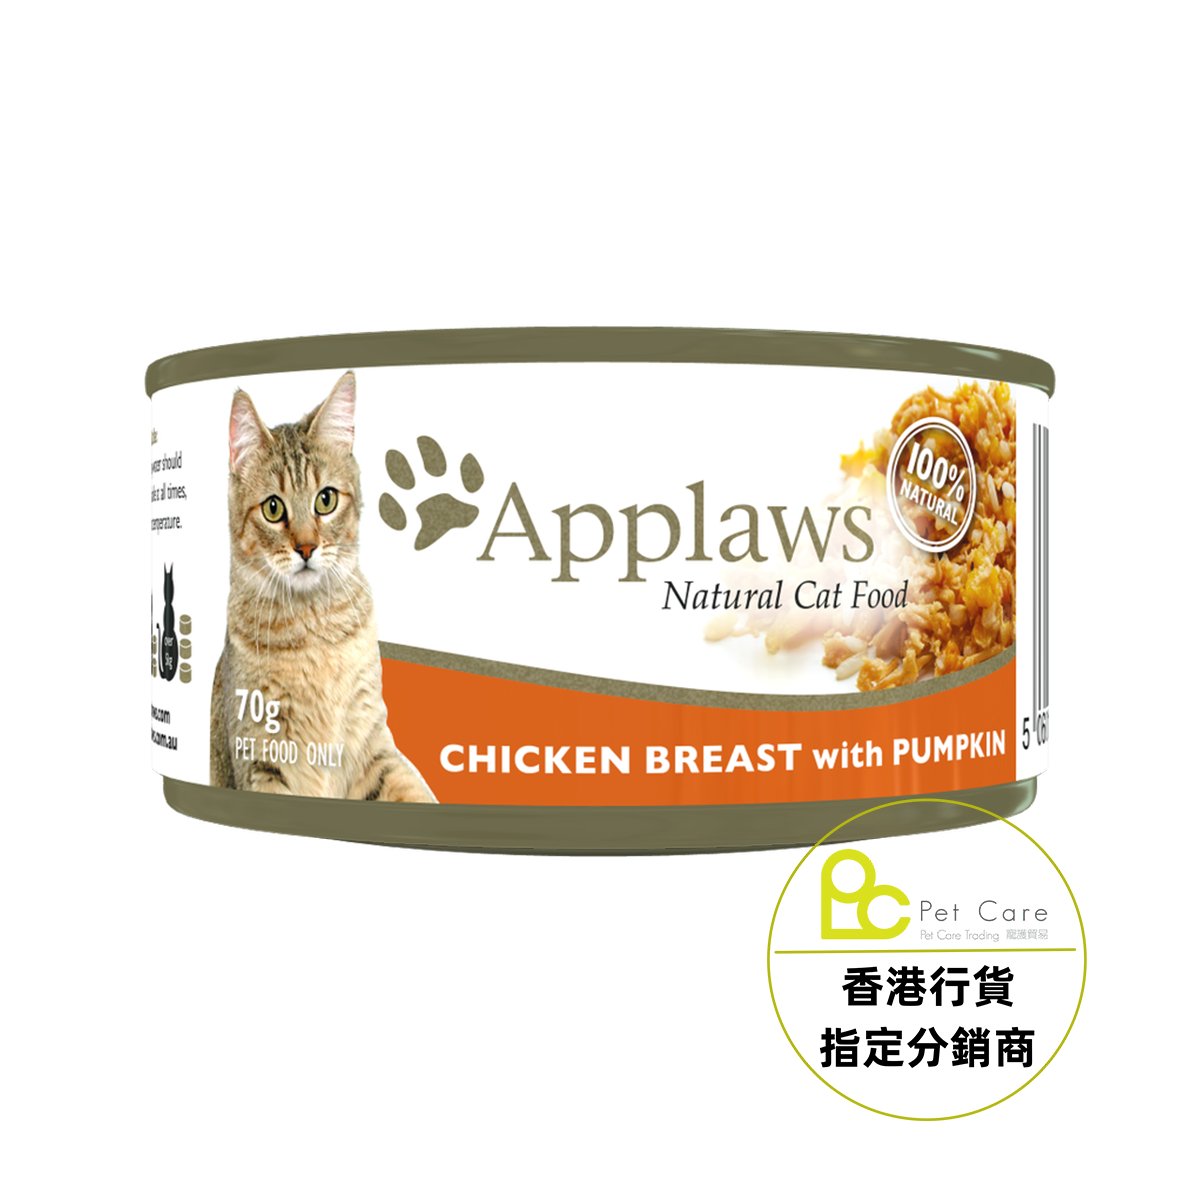 Applaws 全天然 貓罐頭 - 雞胸南瓜 70g (細)